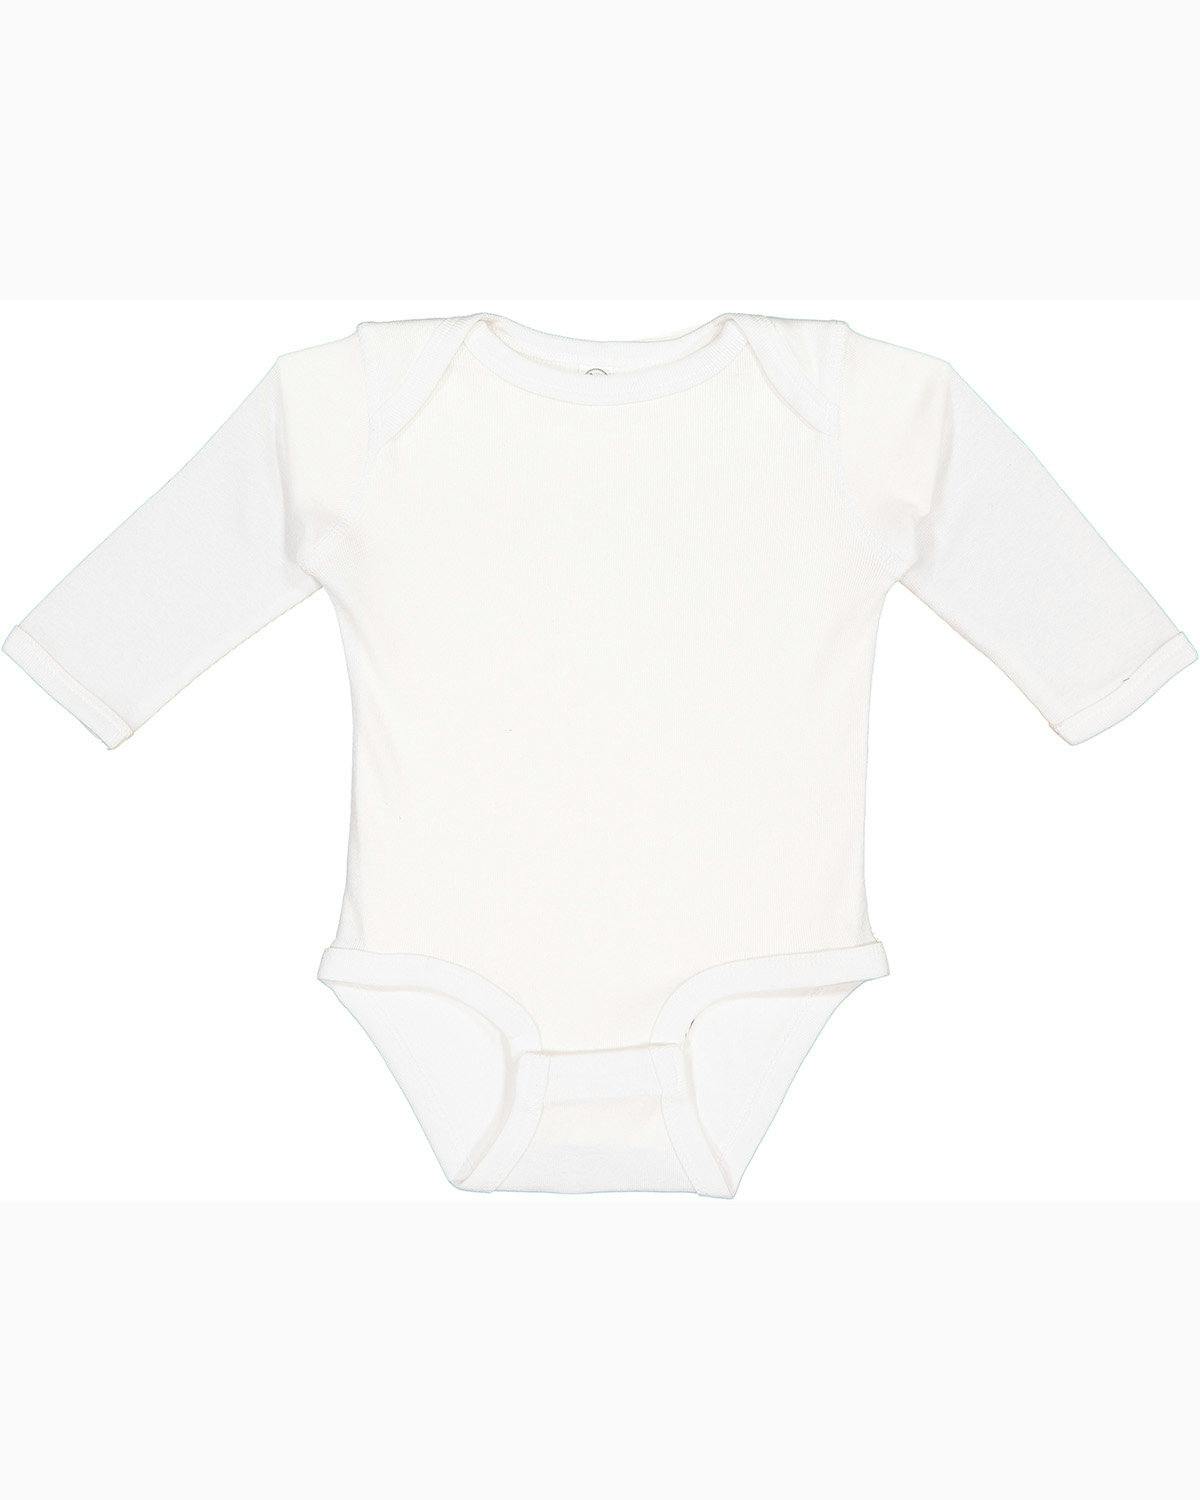 Image for Infant Long-Sleeve Bodysuit